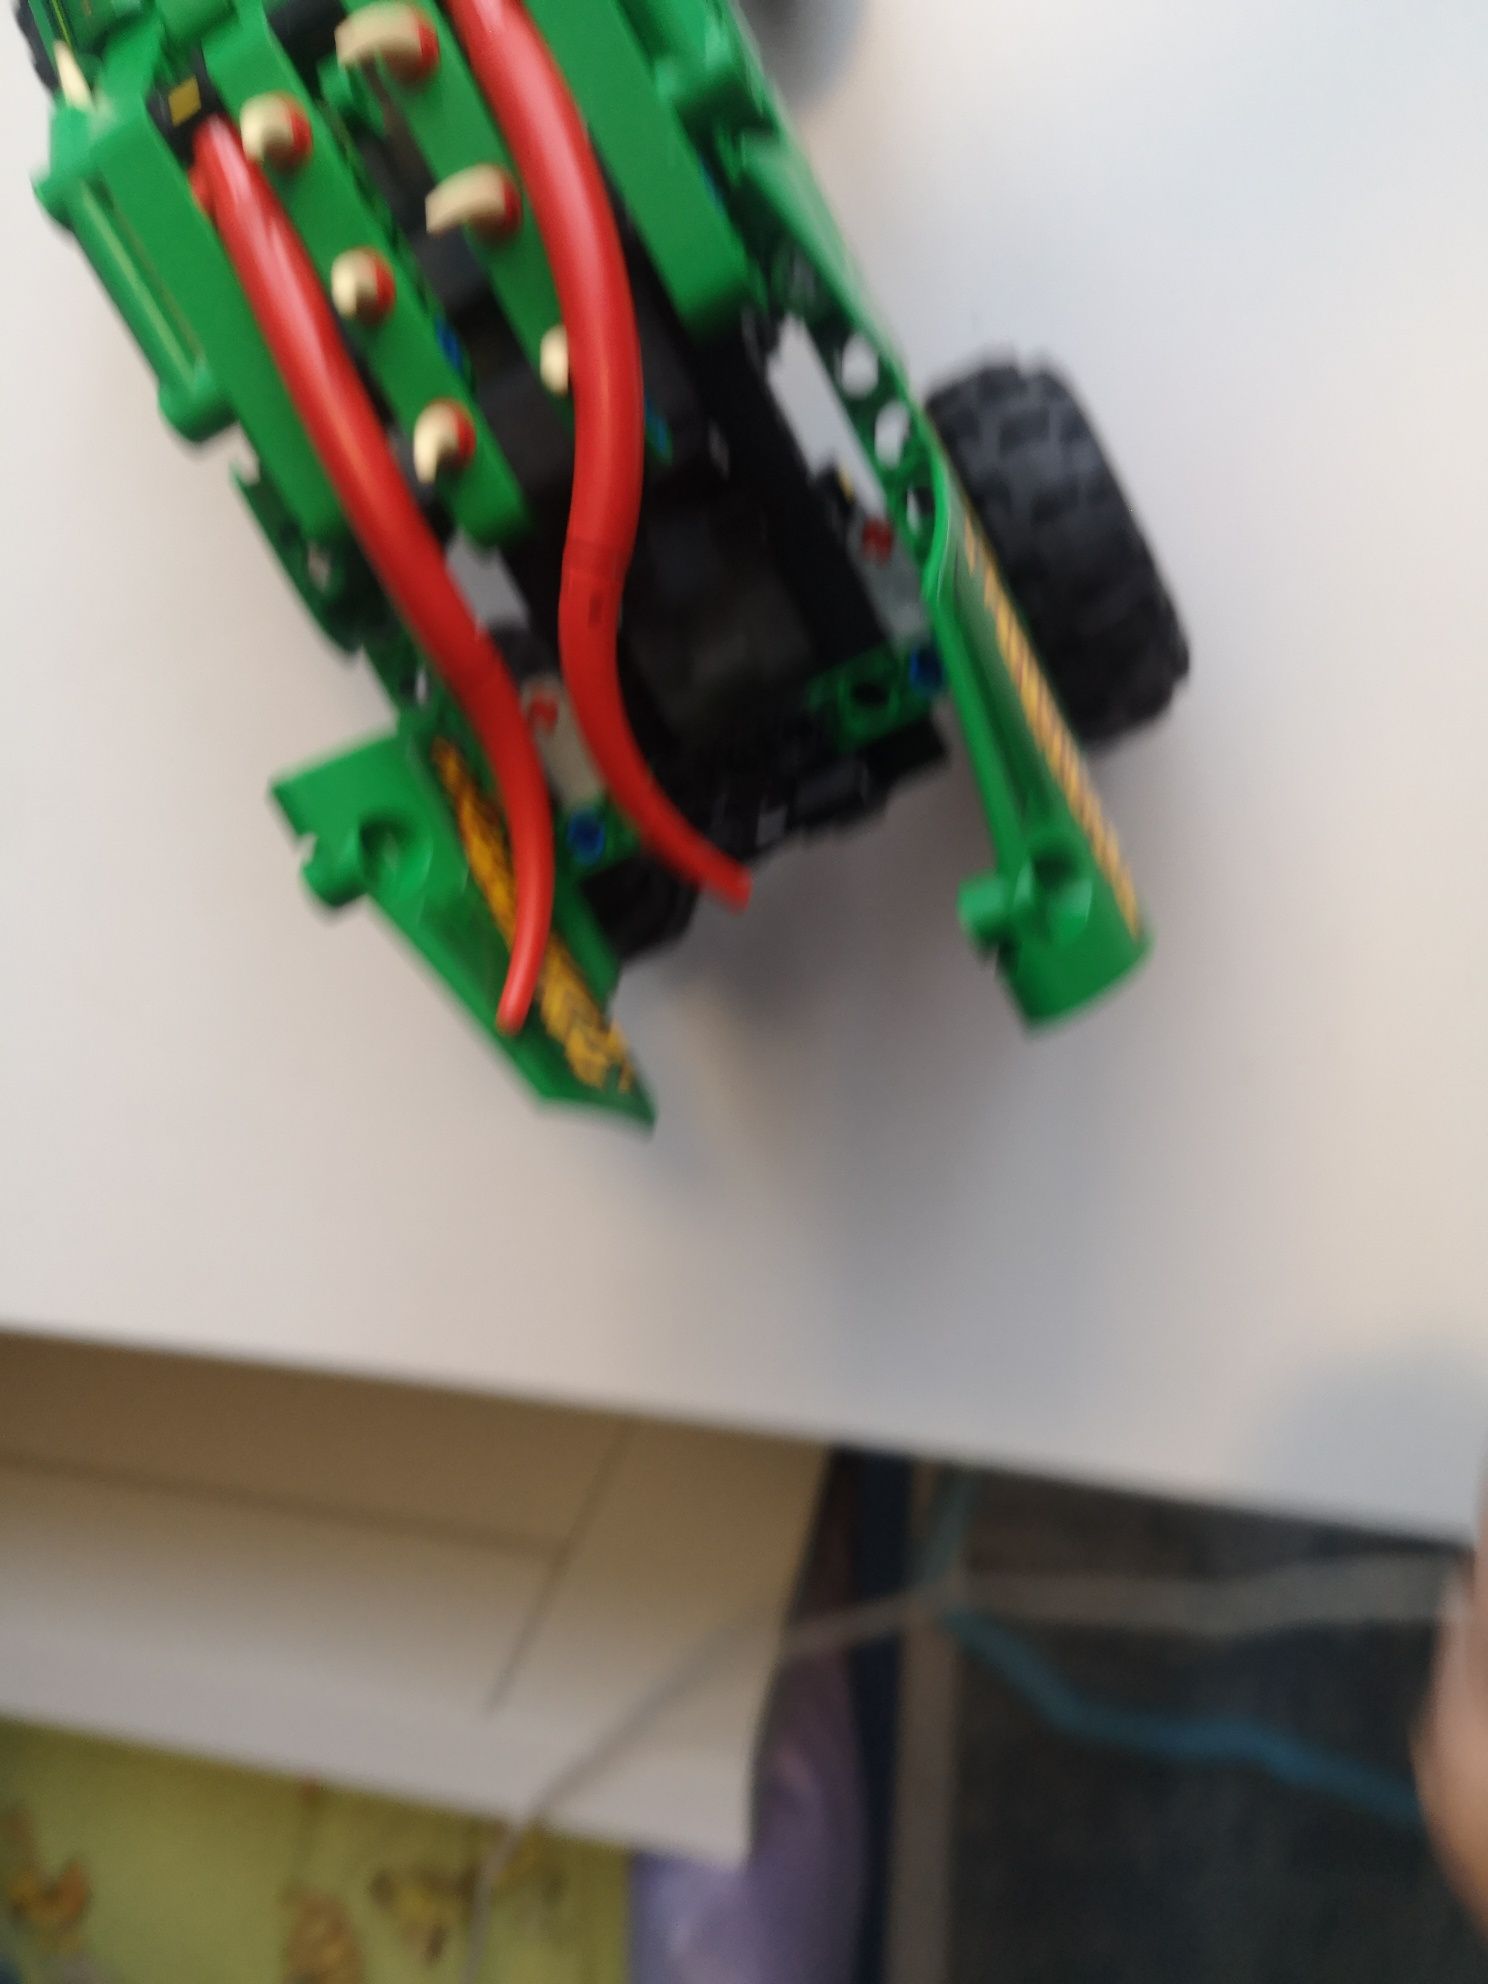 Lego monster truck оригінал